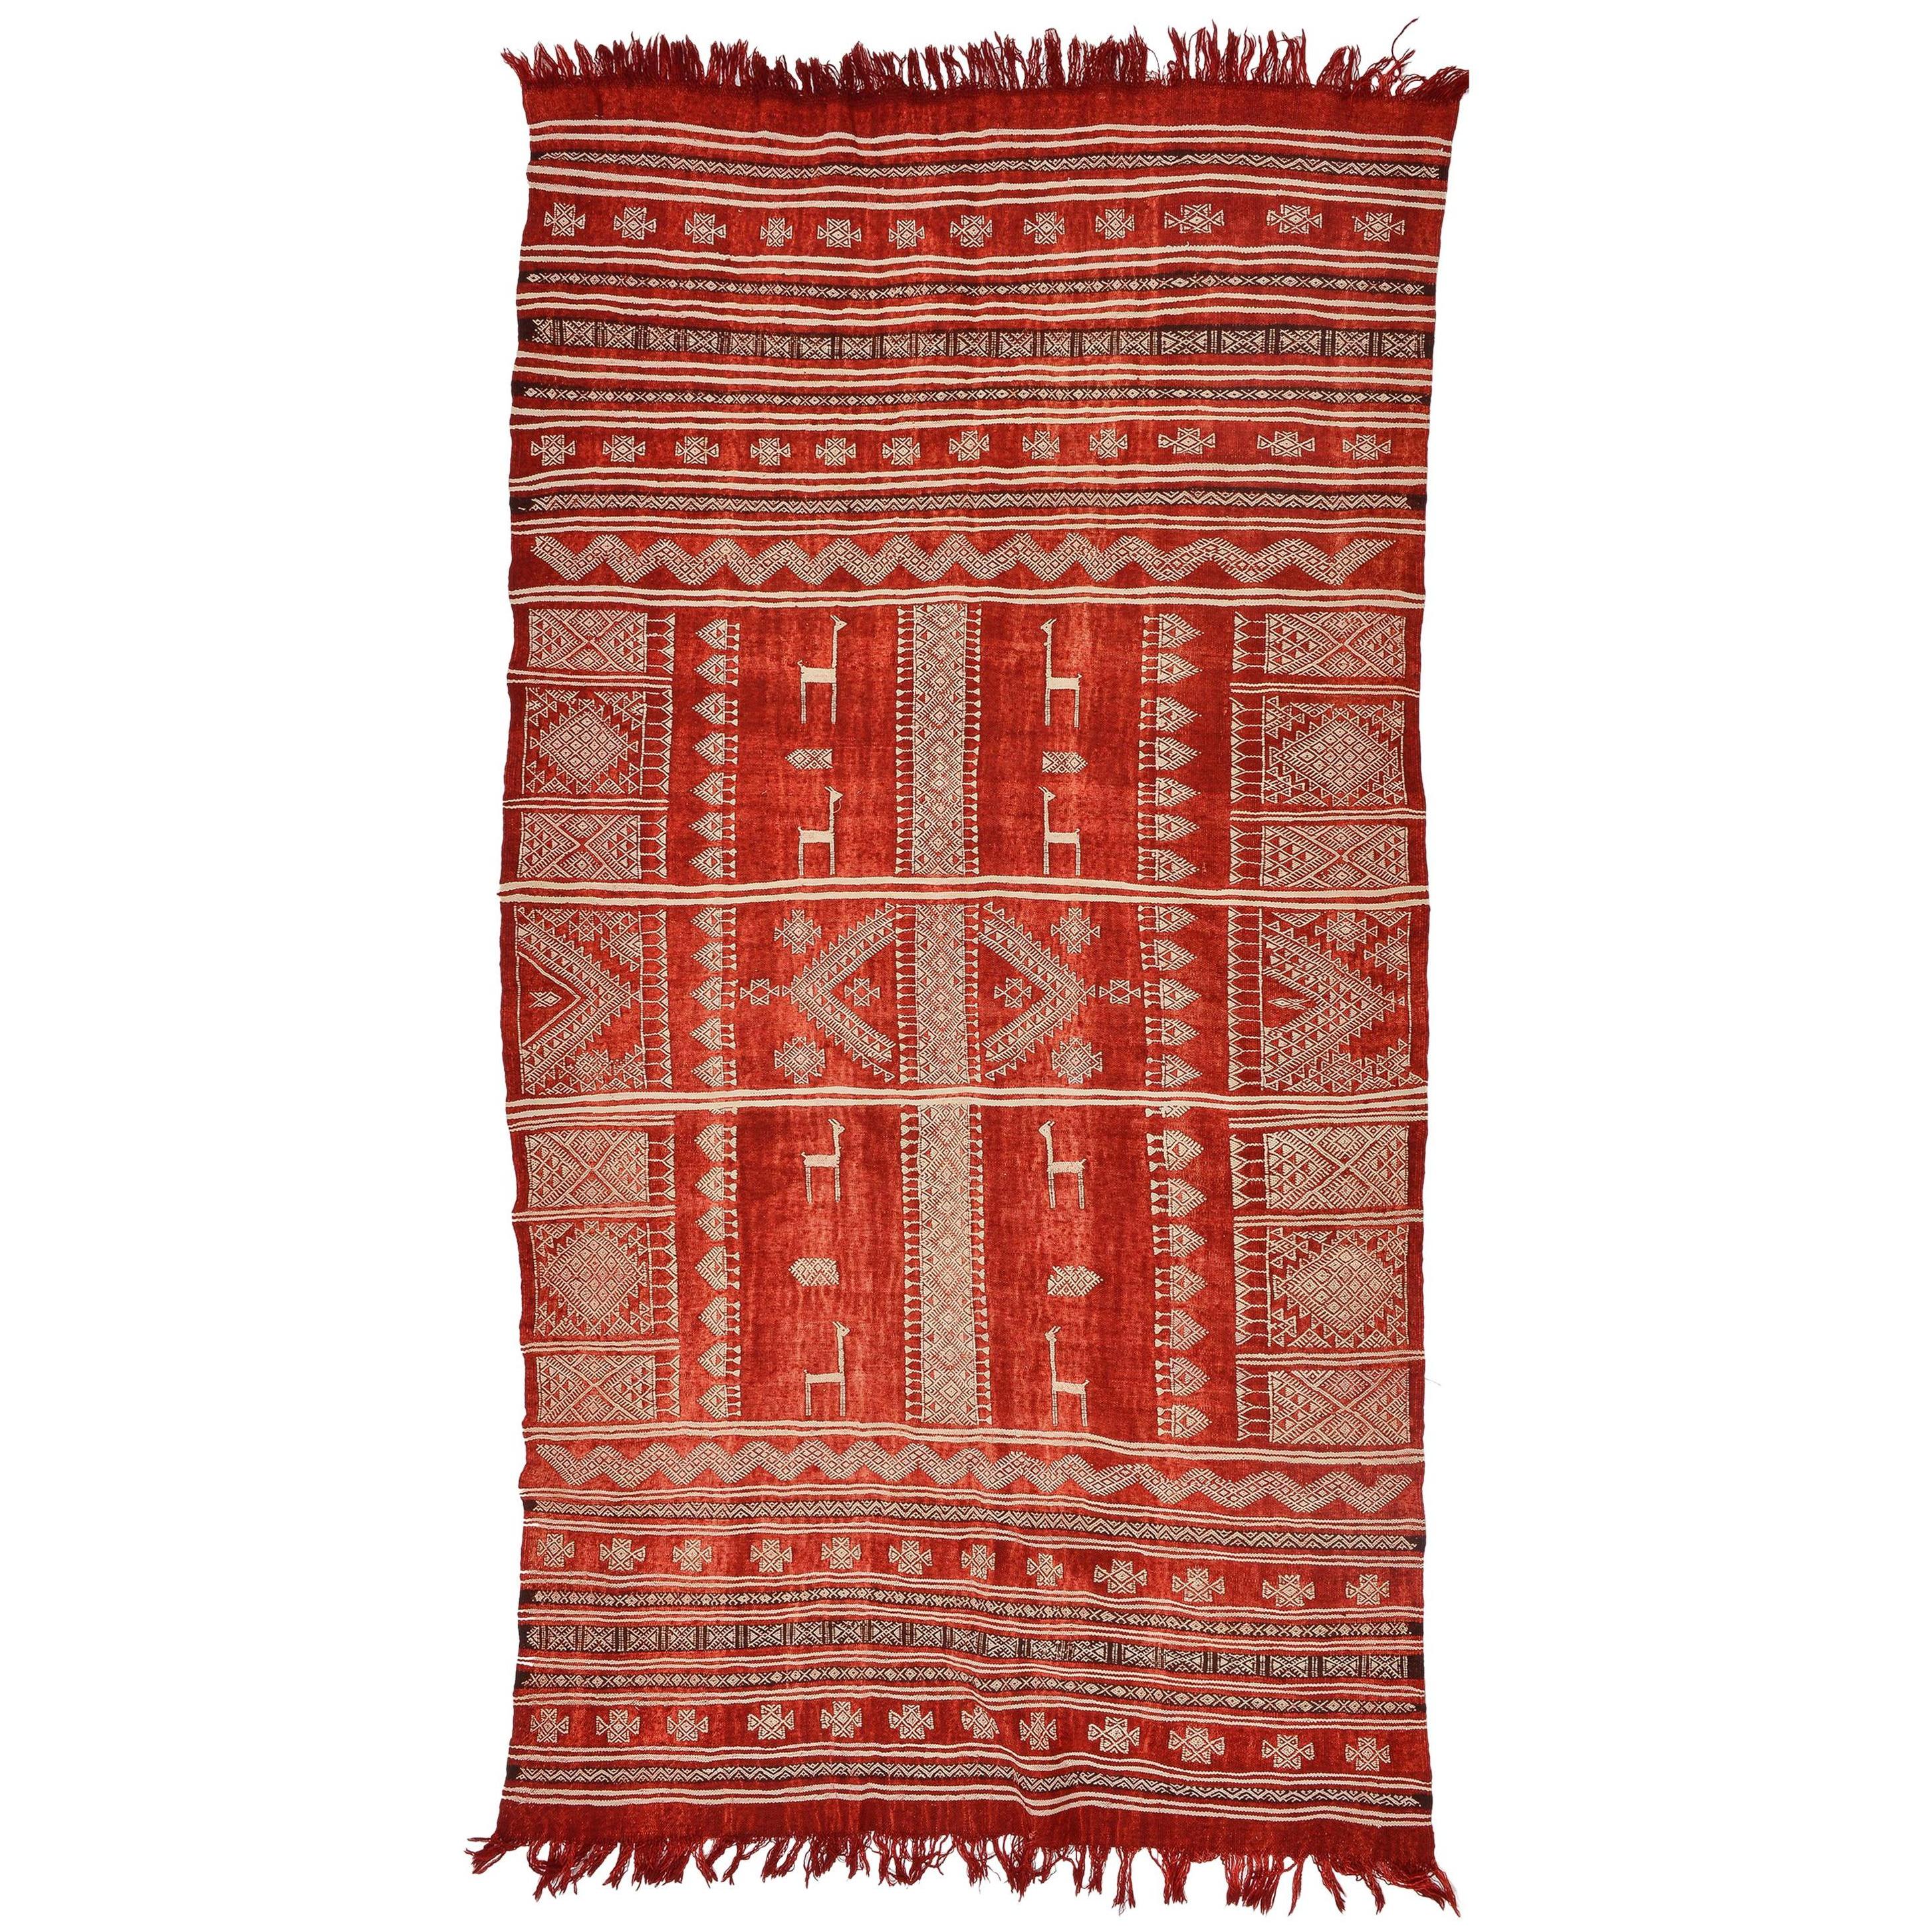 Rare Tunisian Ouedzem Embroidered Tissue or Carpet